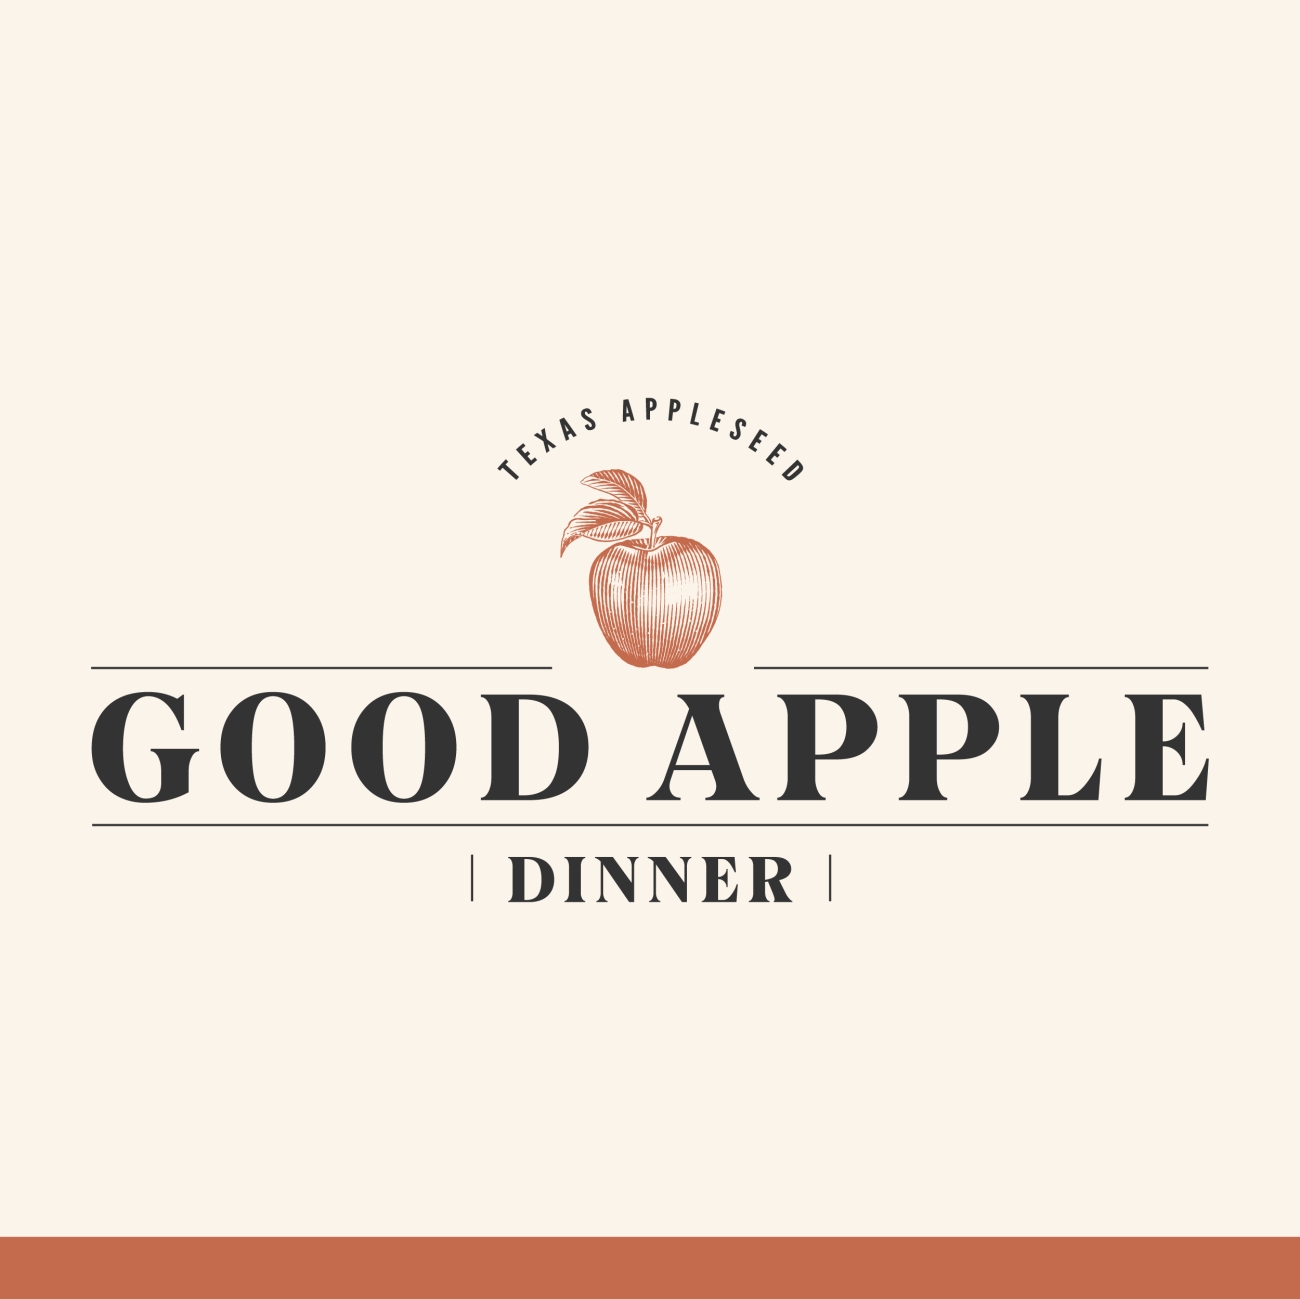 Texas Appleseed Good Apple Dinner